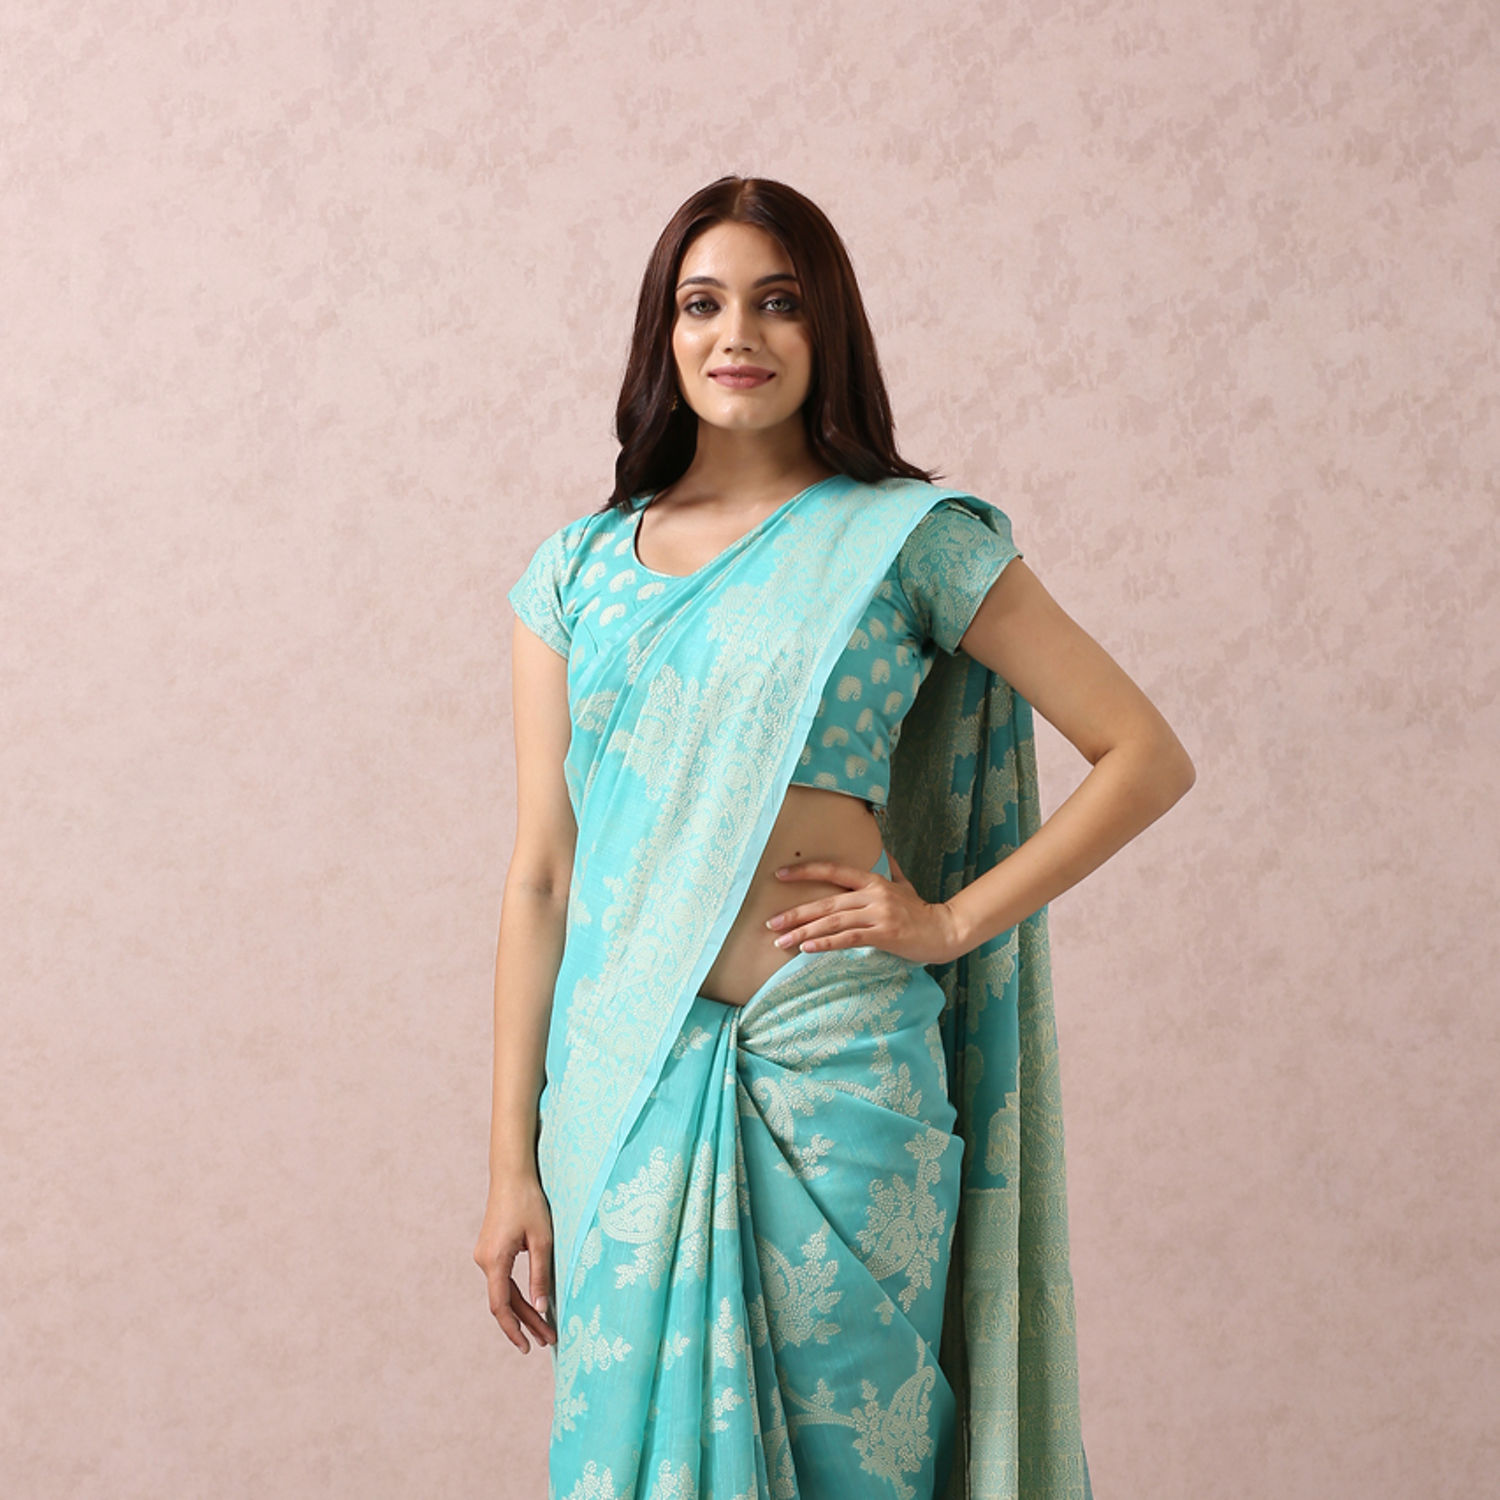 Size S Women Dupatta Indian & Pakistani Clothing | eBay